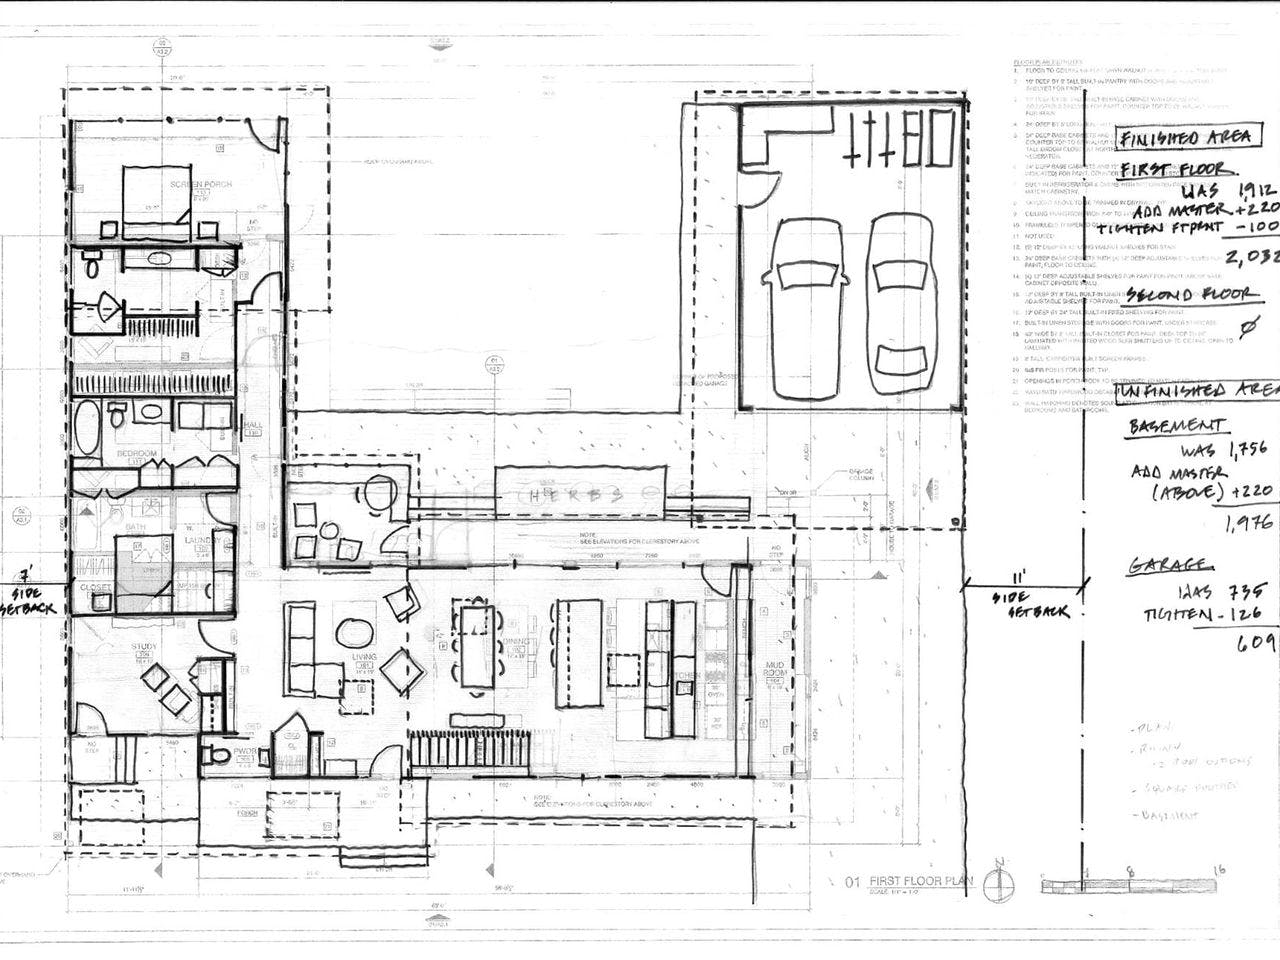 Romence Place floorplan sketch